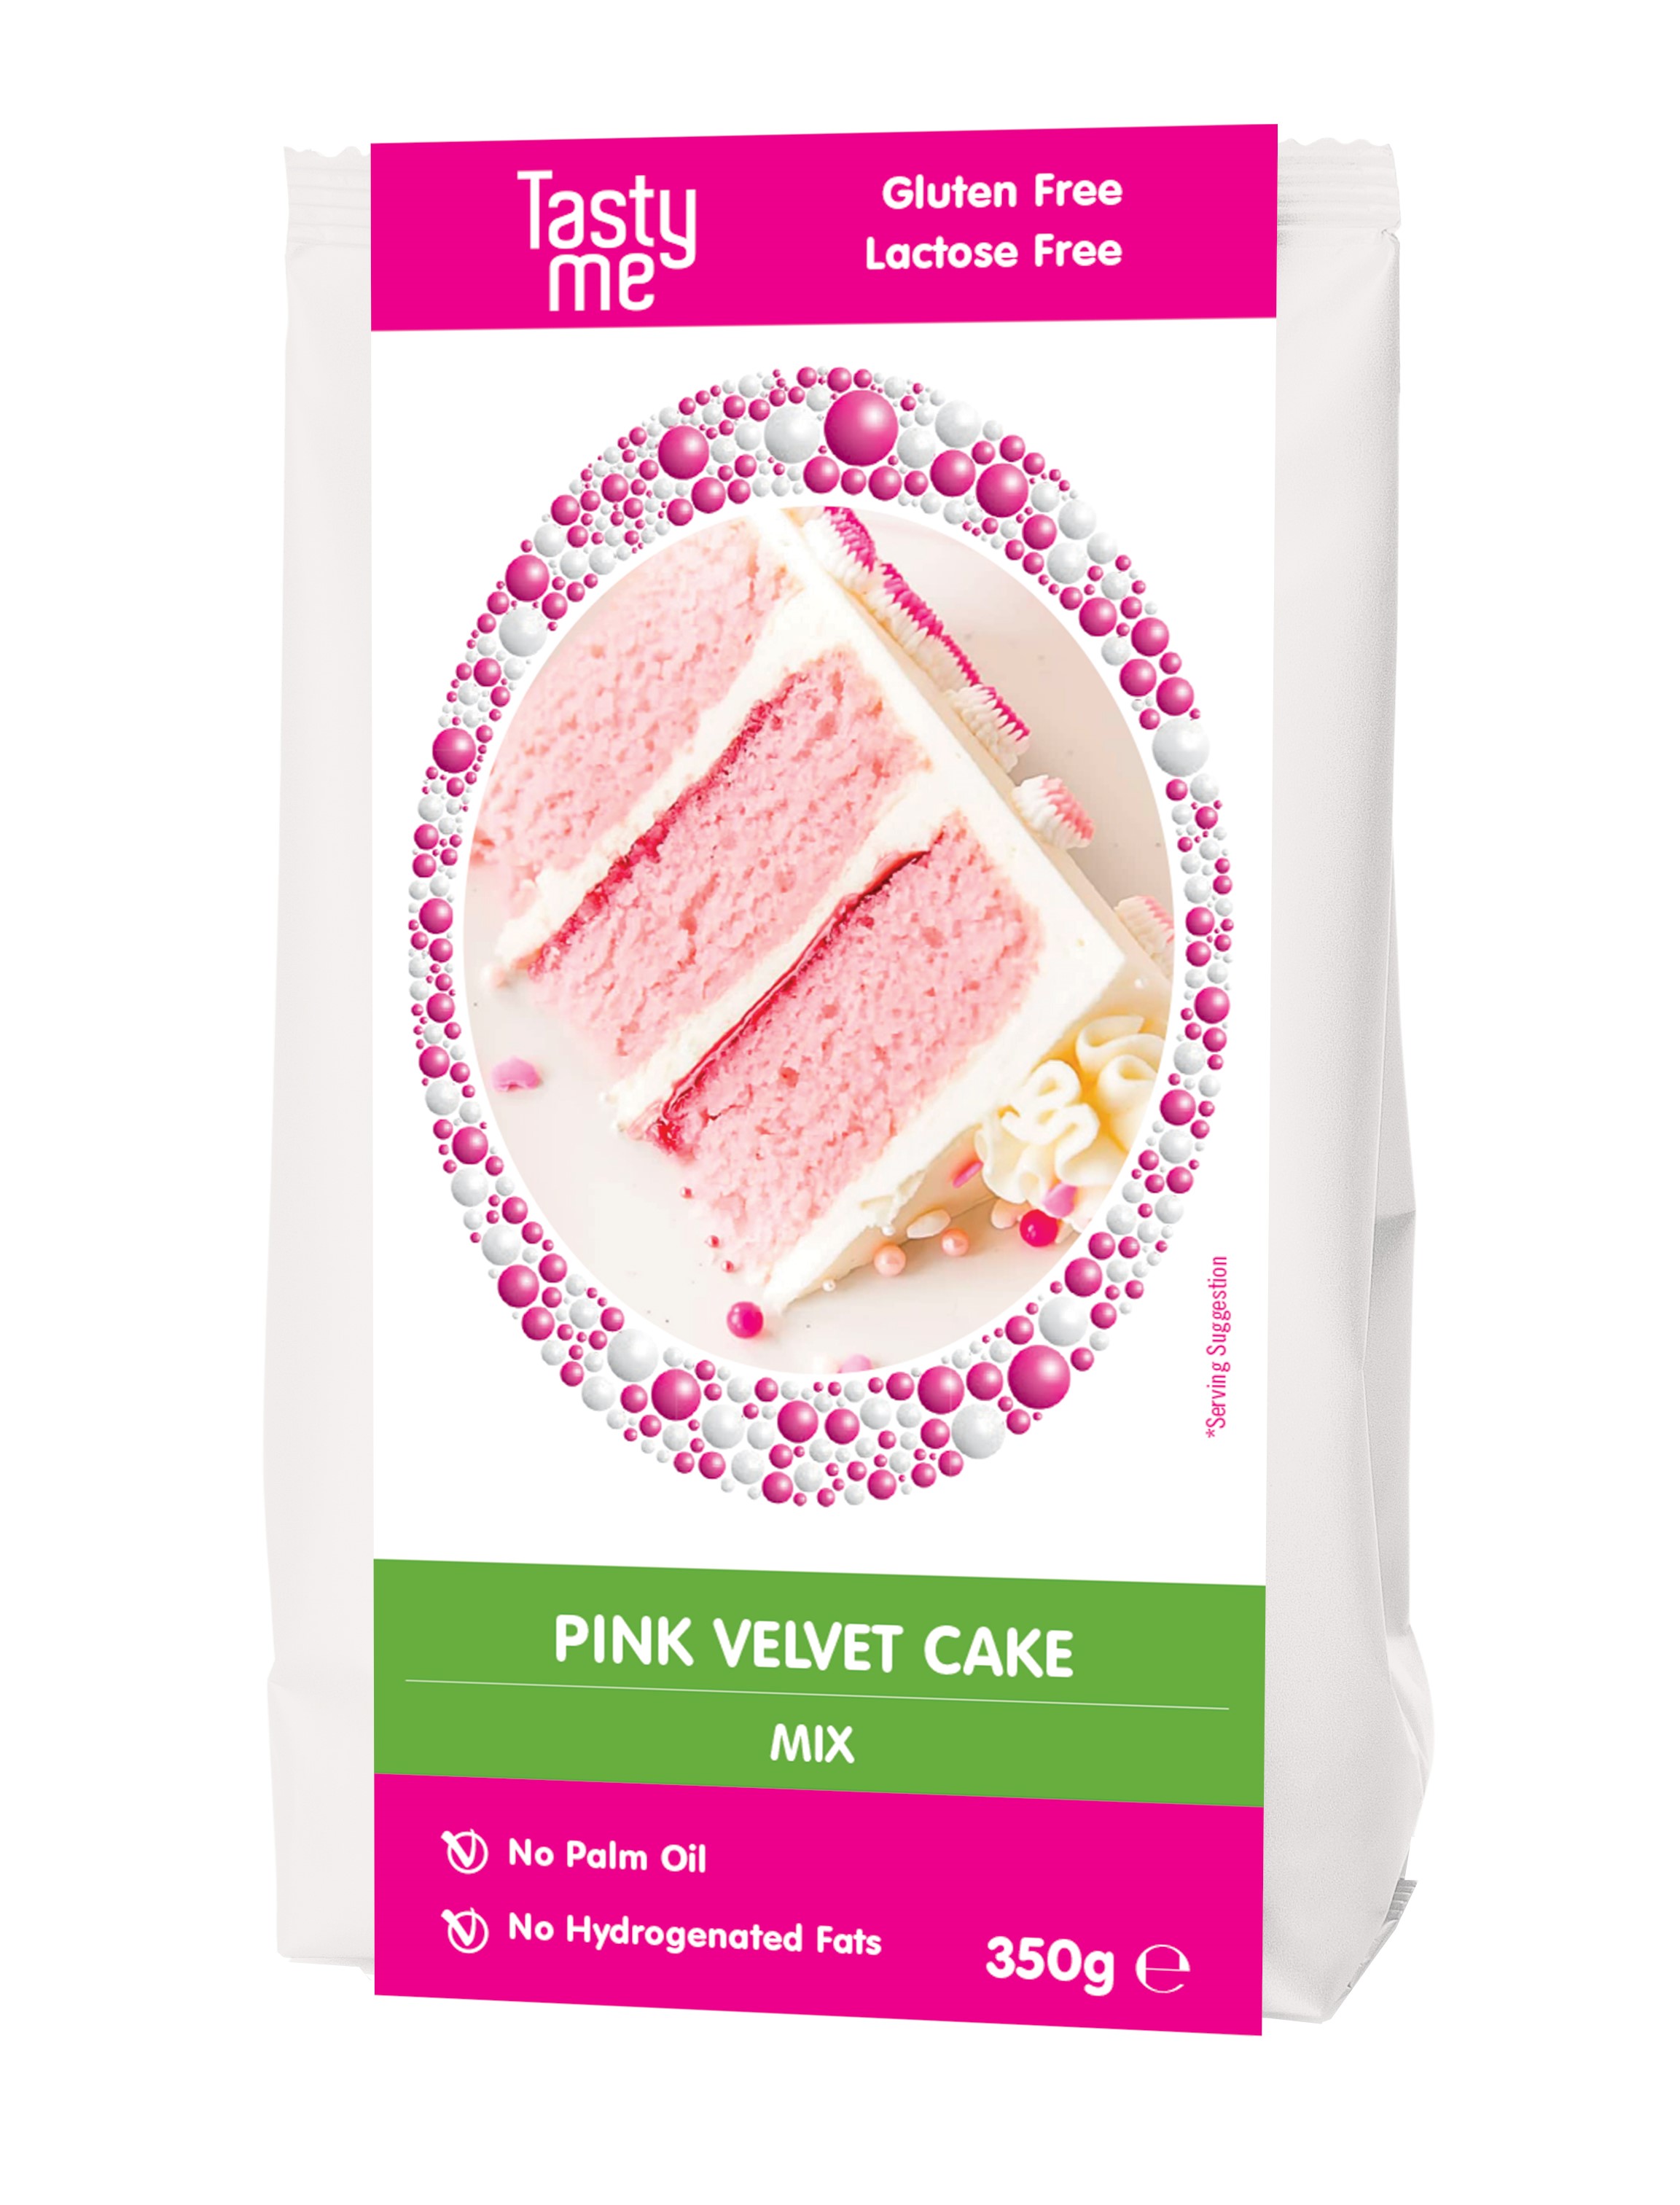 Pink velvet cake mix 350g - glutenvrij